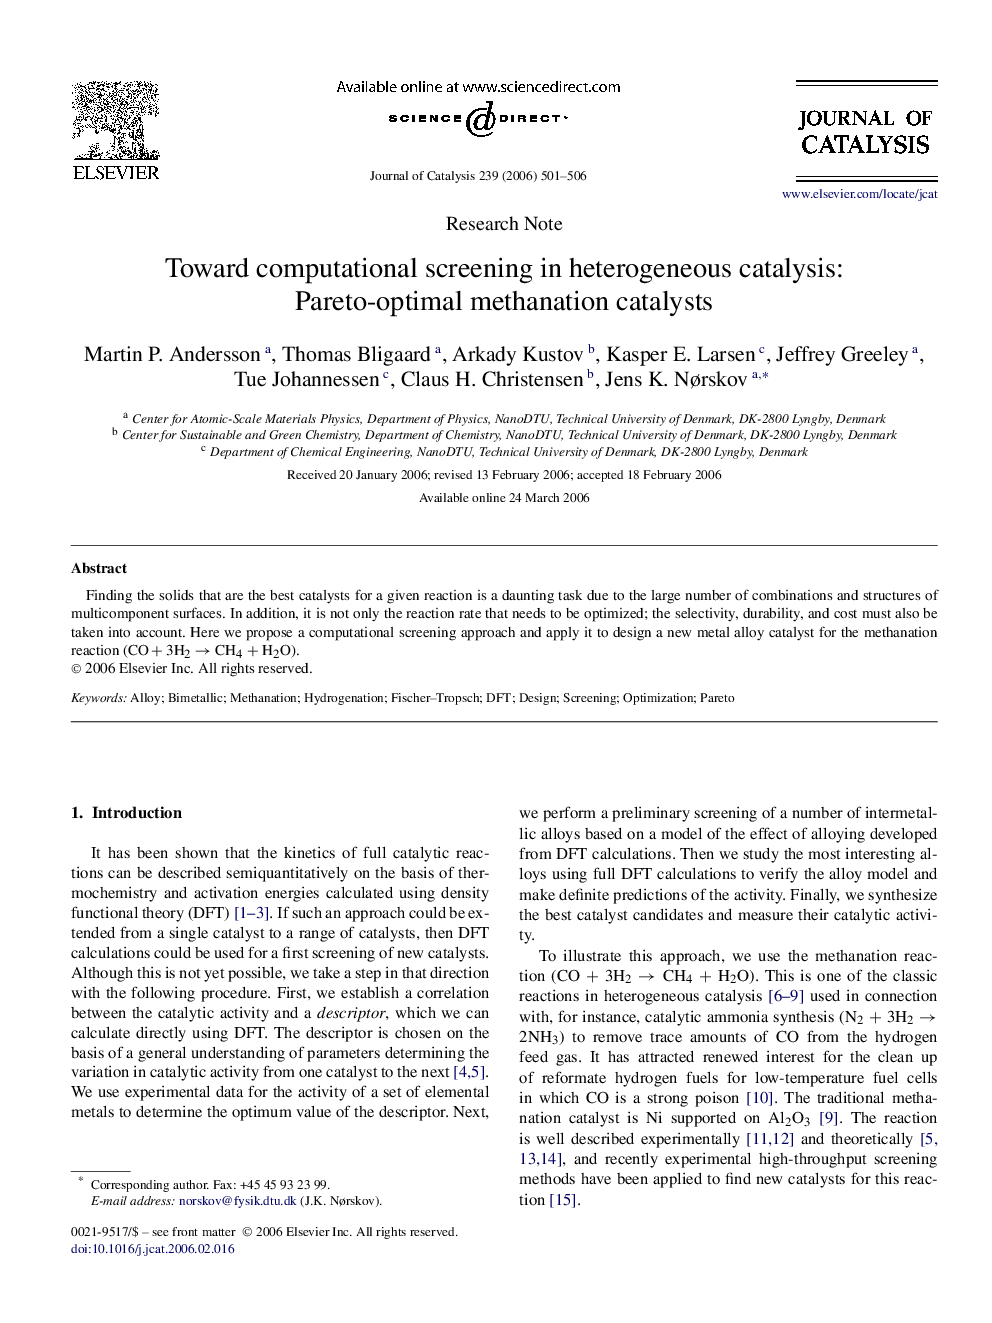 Toward computational screening in heterogeneous catalysis: Pareto-optimal methanation catalysts